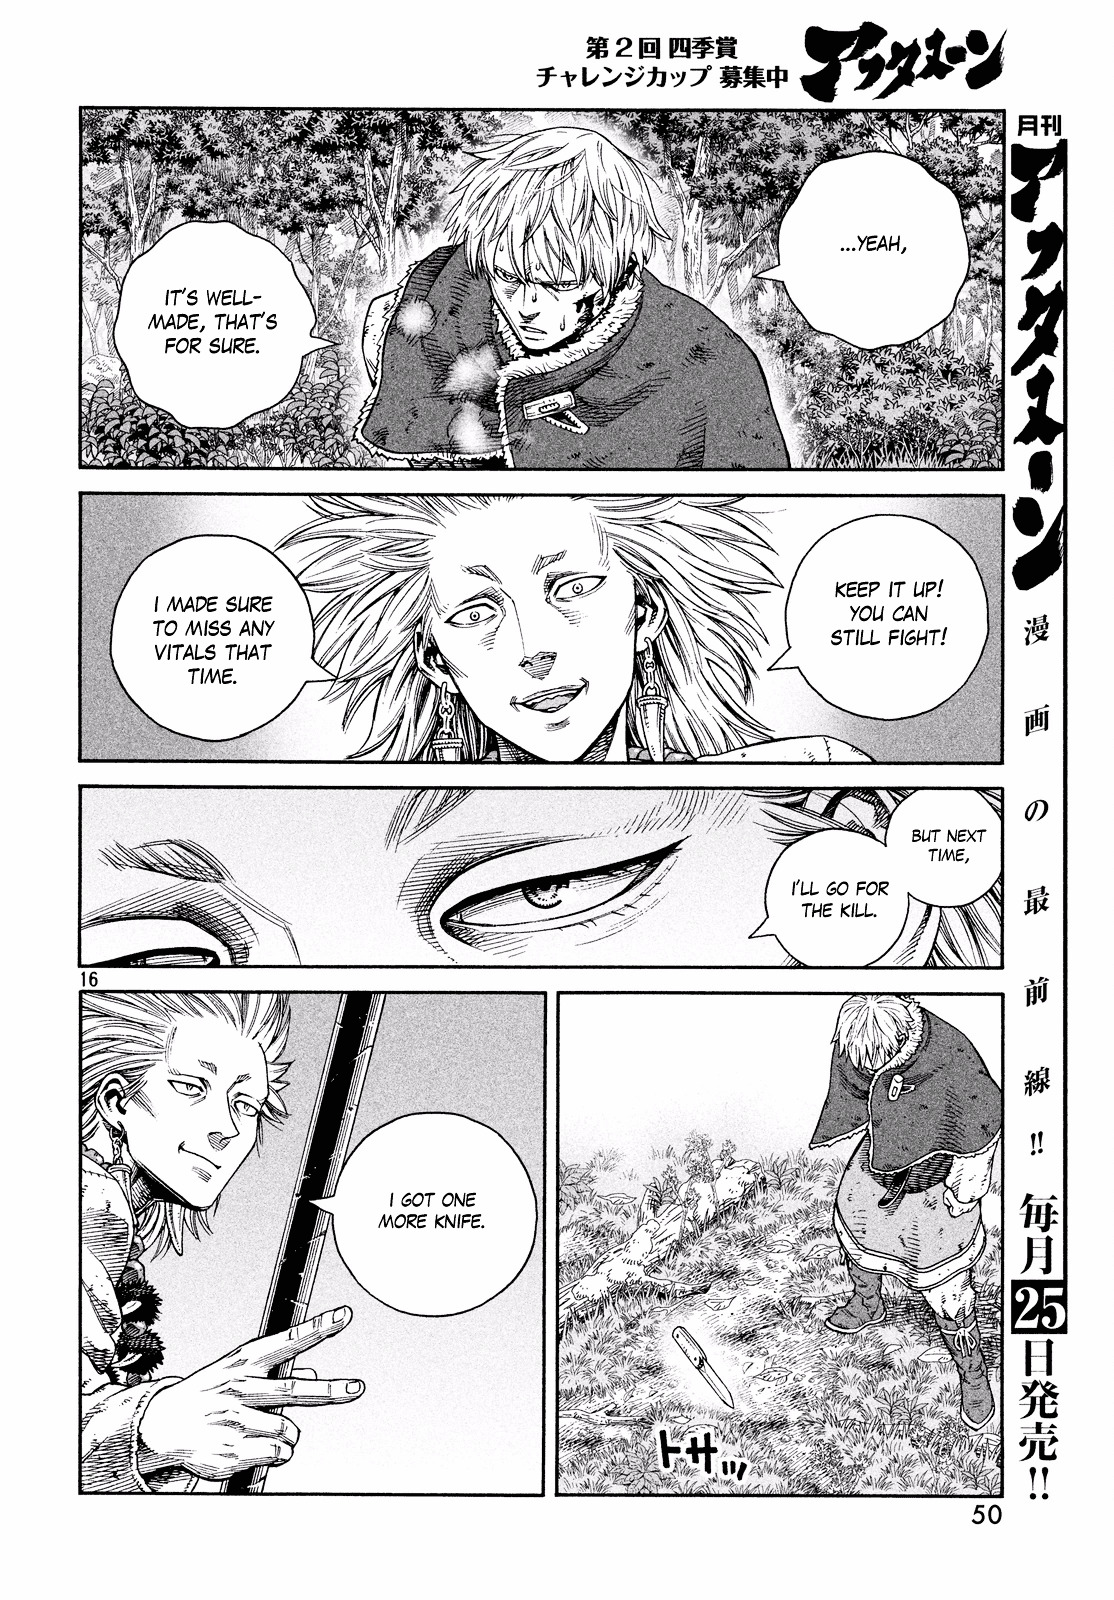 Vinland Saga Manga Manga Chapter - 135 - image 17